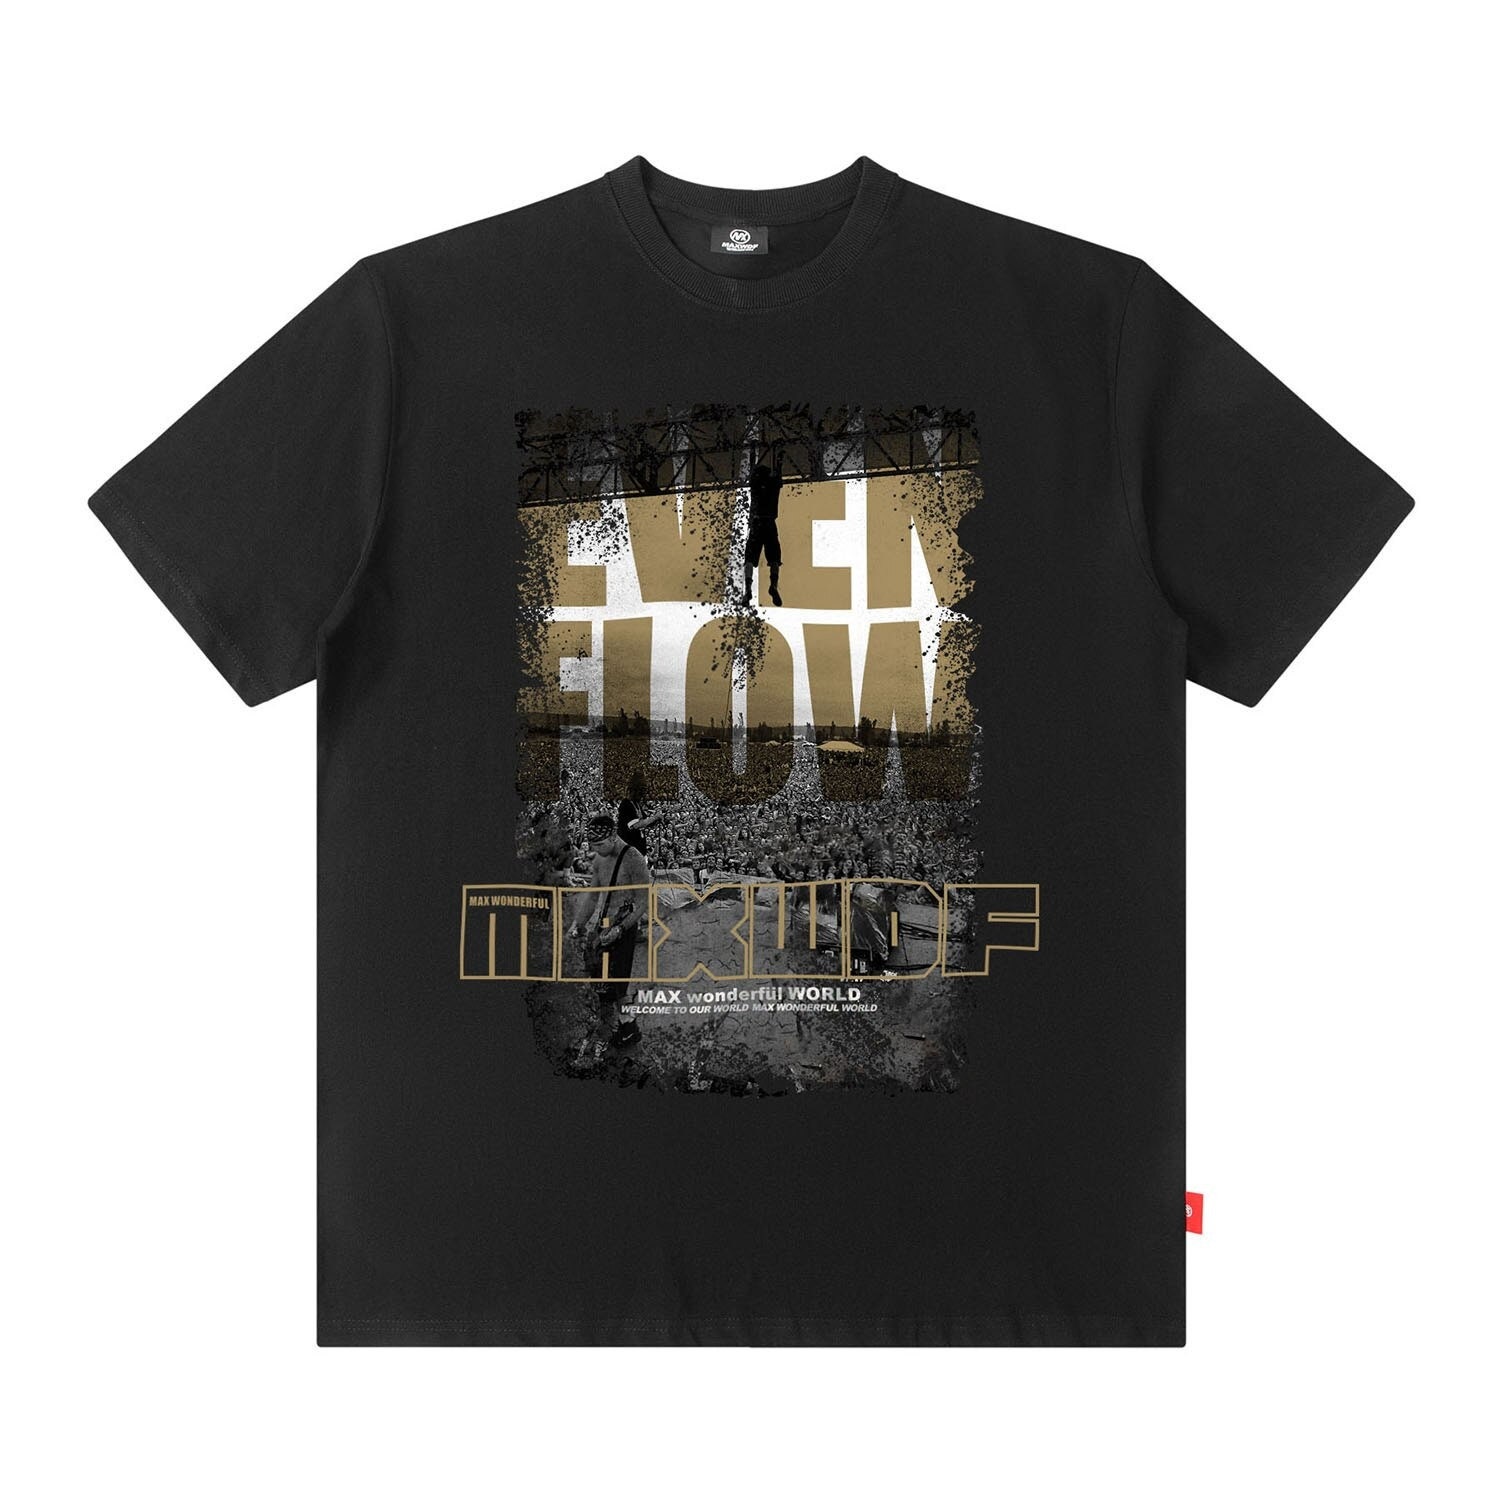 Streetwear Even Flow Artwork Tee Shirt Urban Fashion Short Sleeves Black Graphic T Shirt